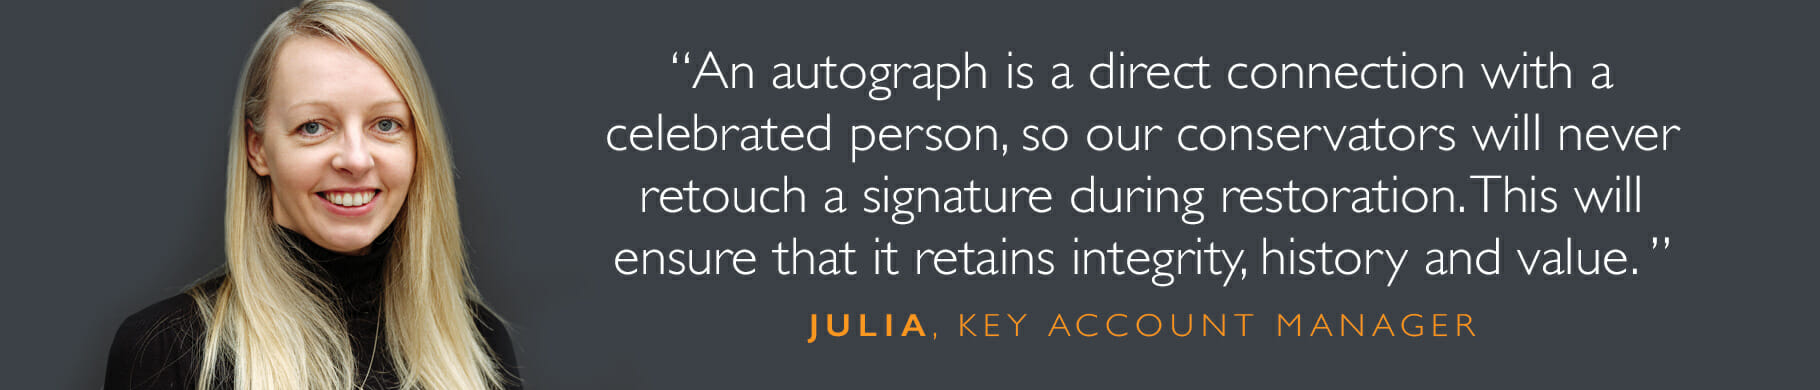 Julia autograph quote